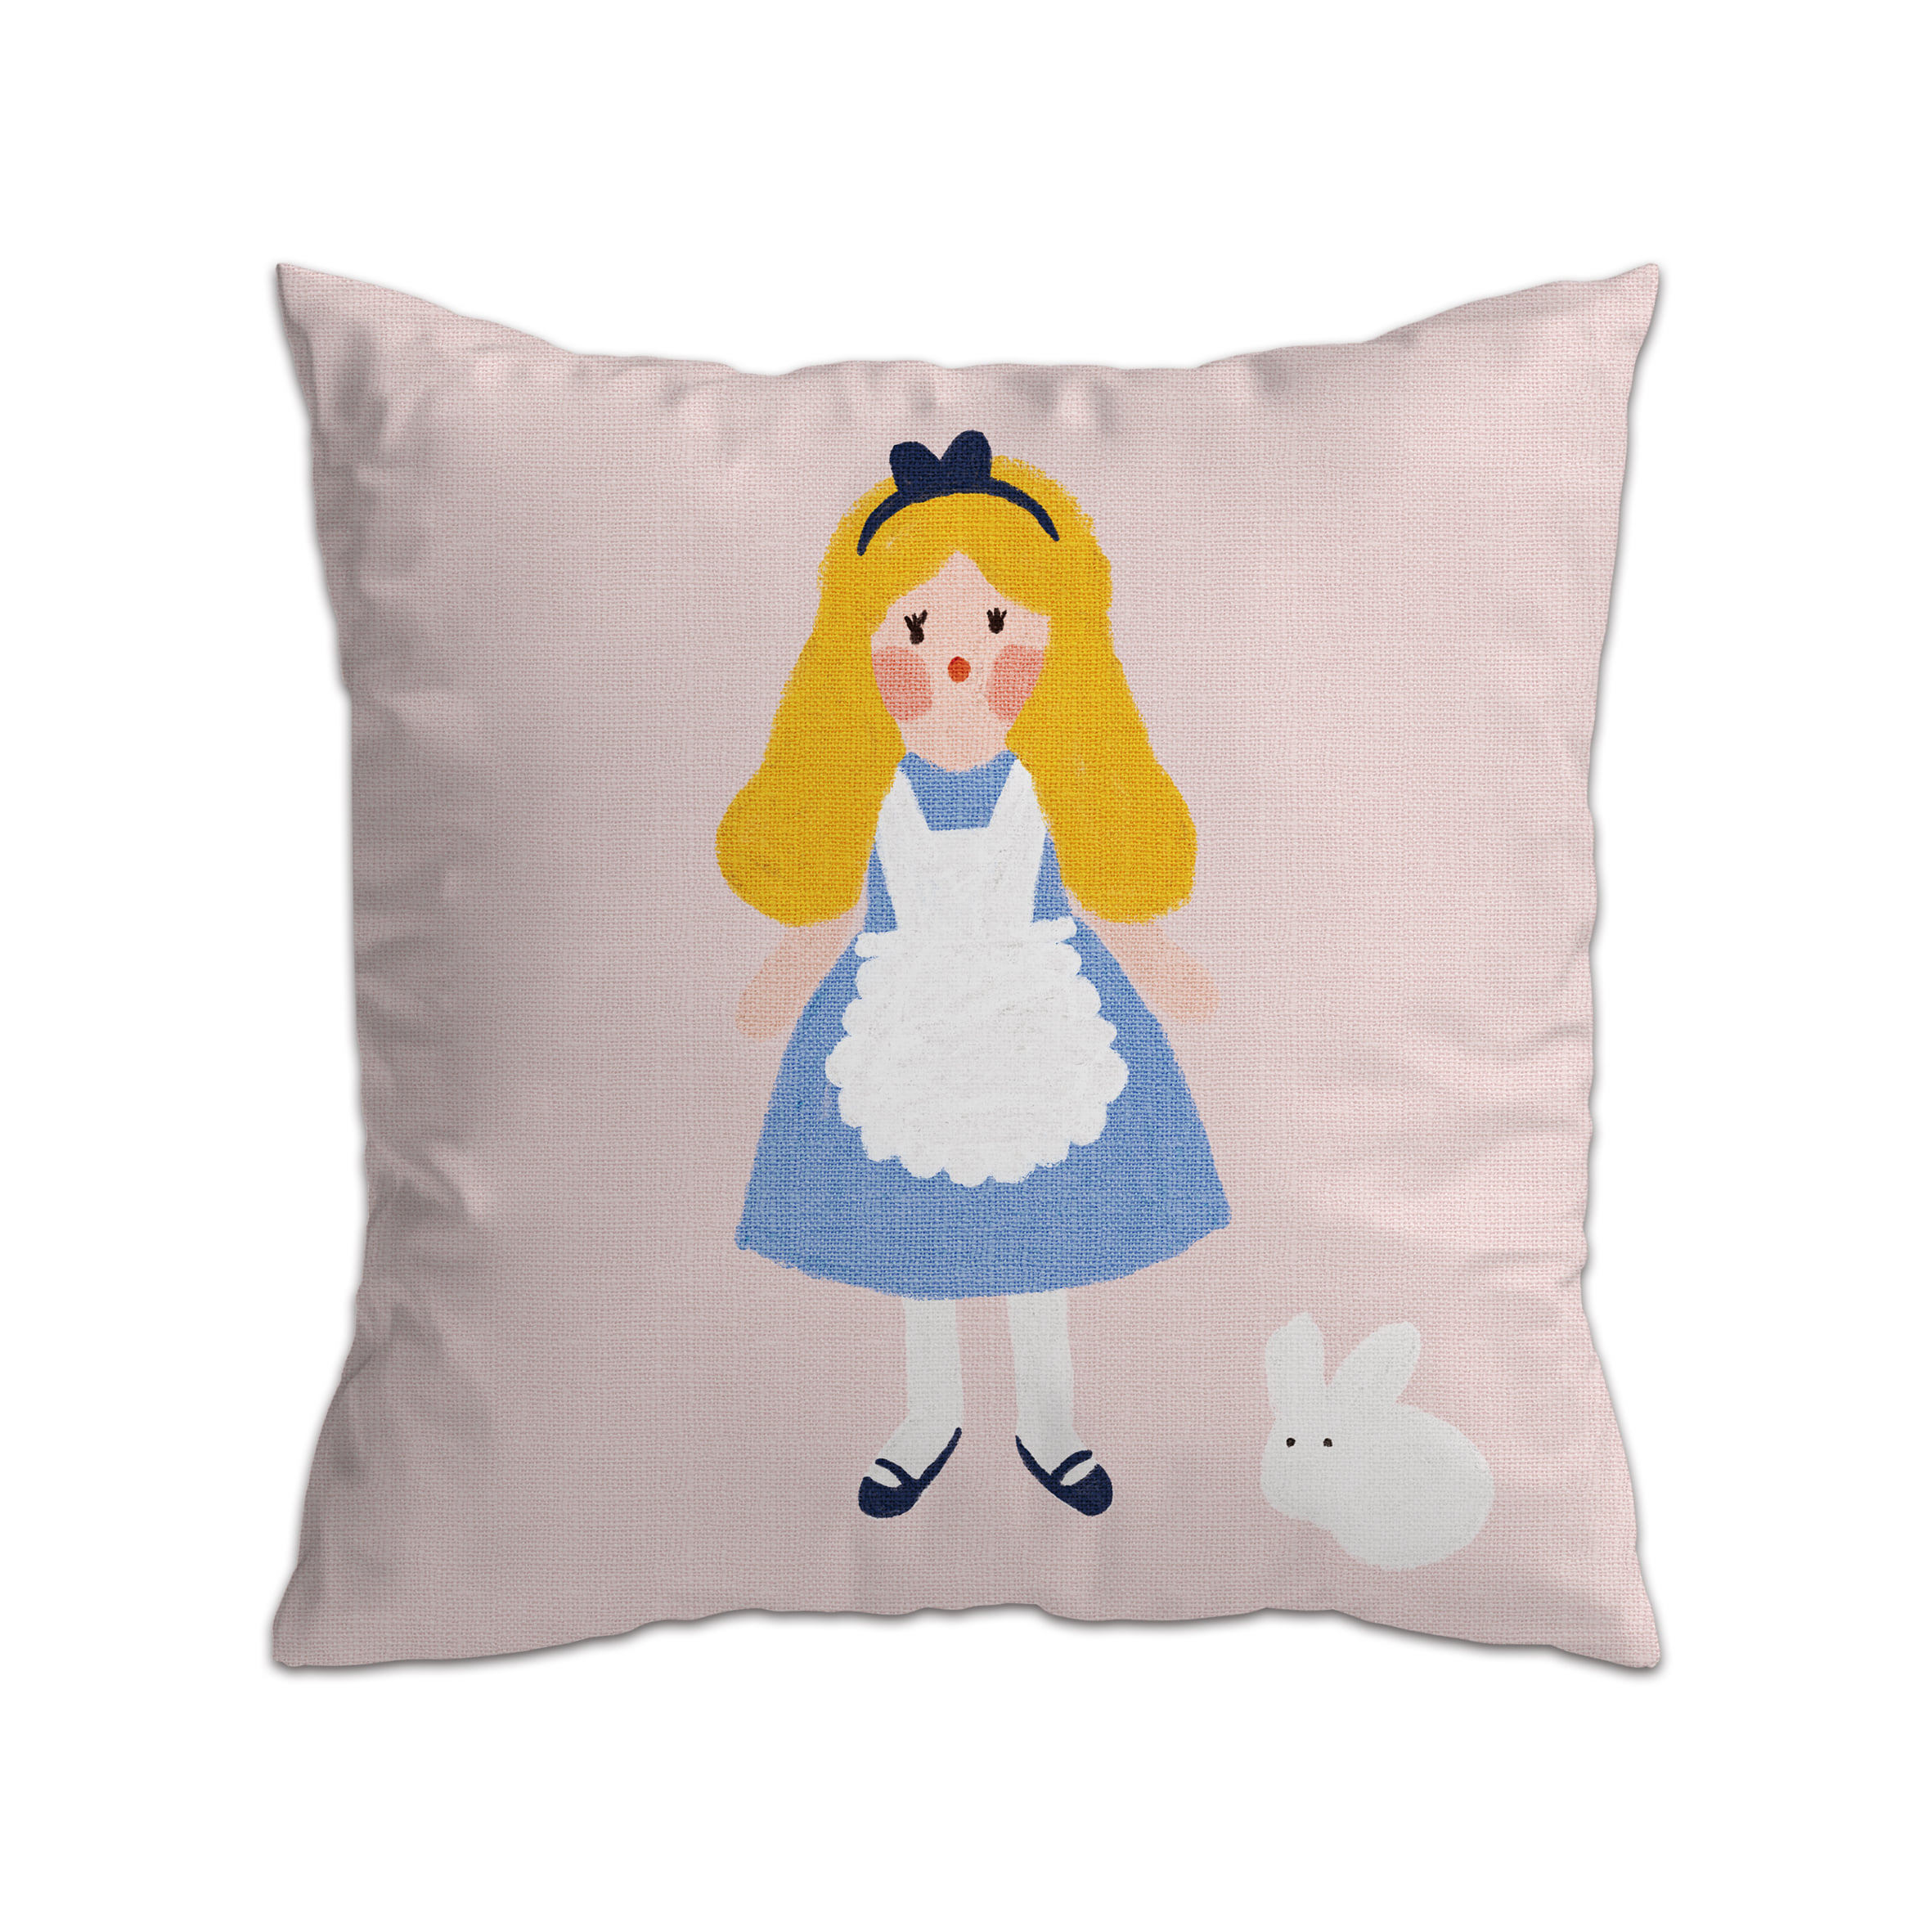 Alice in Wonderland Cushion